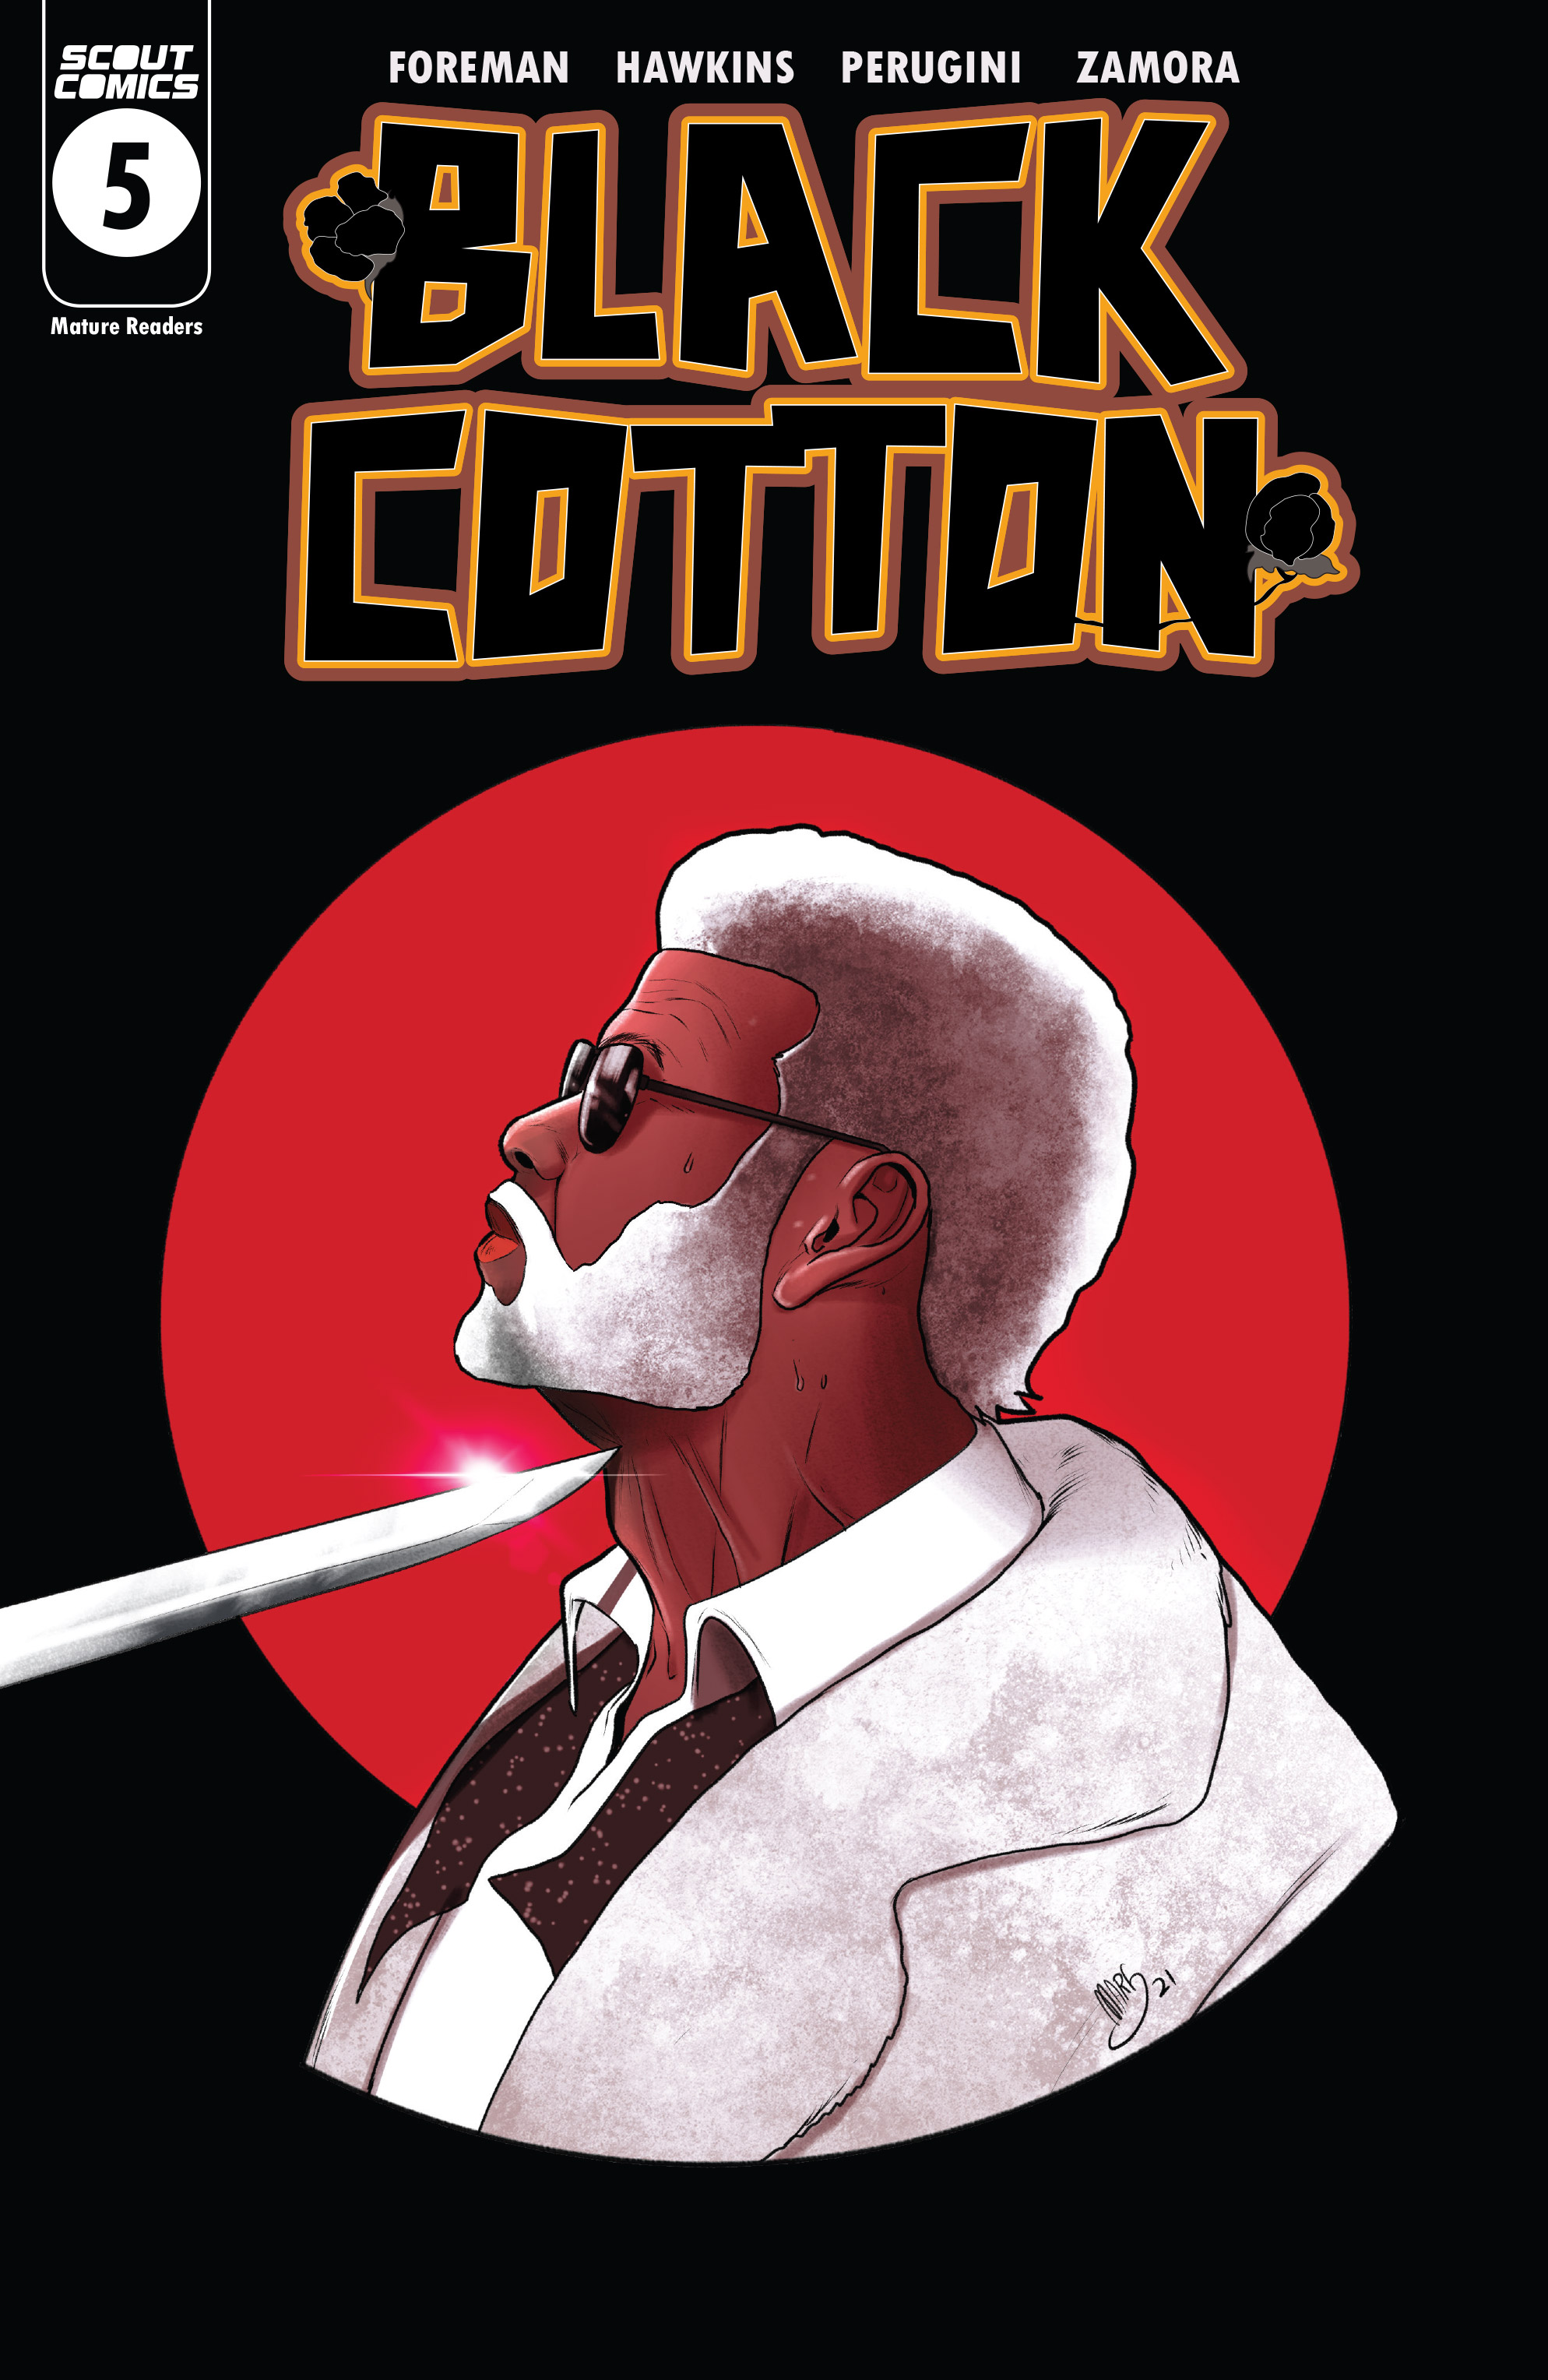 Read online Black Cotton comic -  Issue #5 - 1